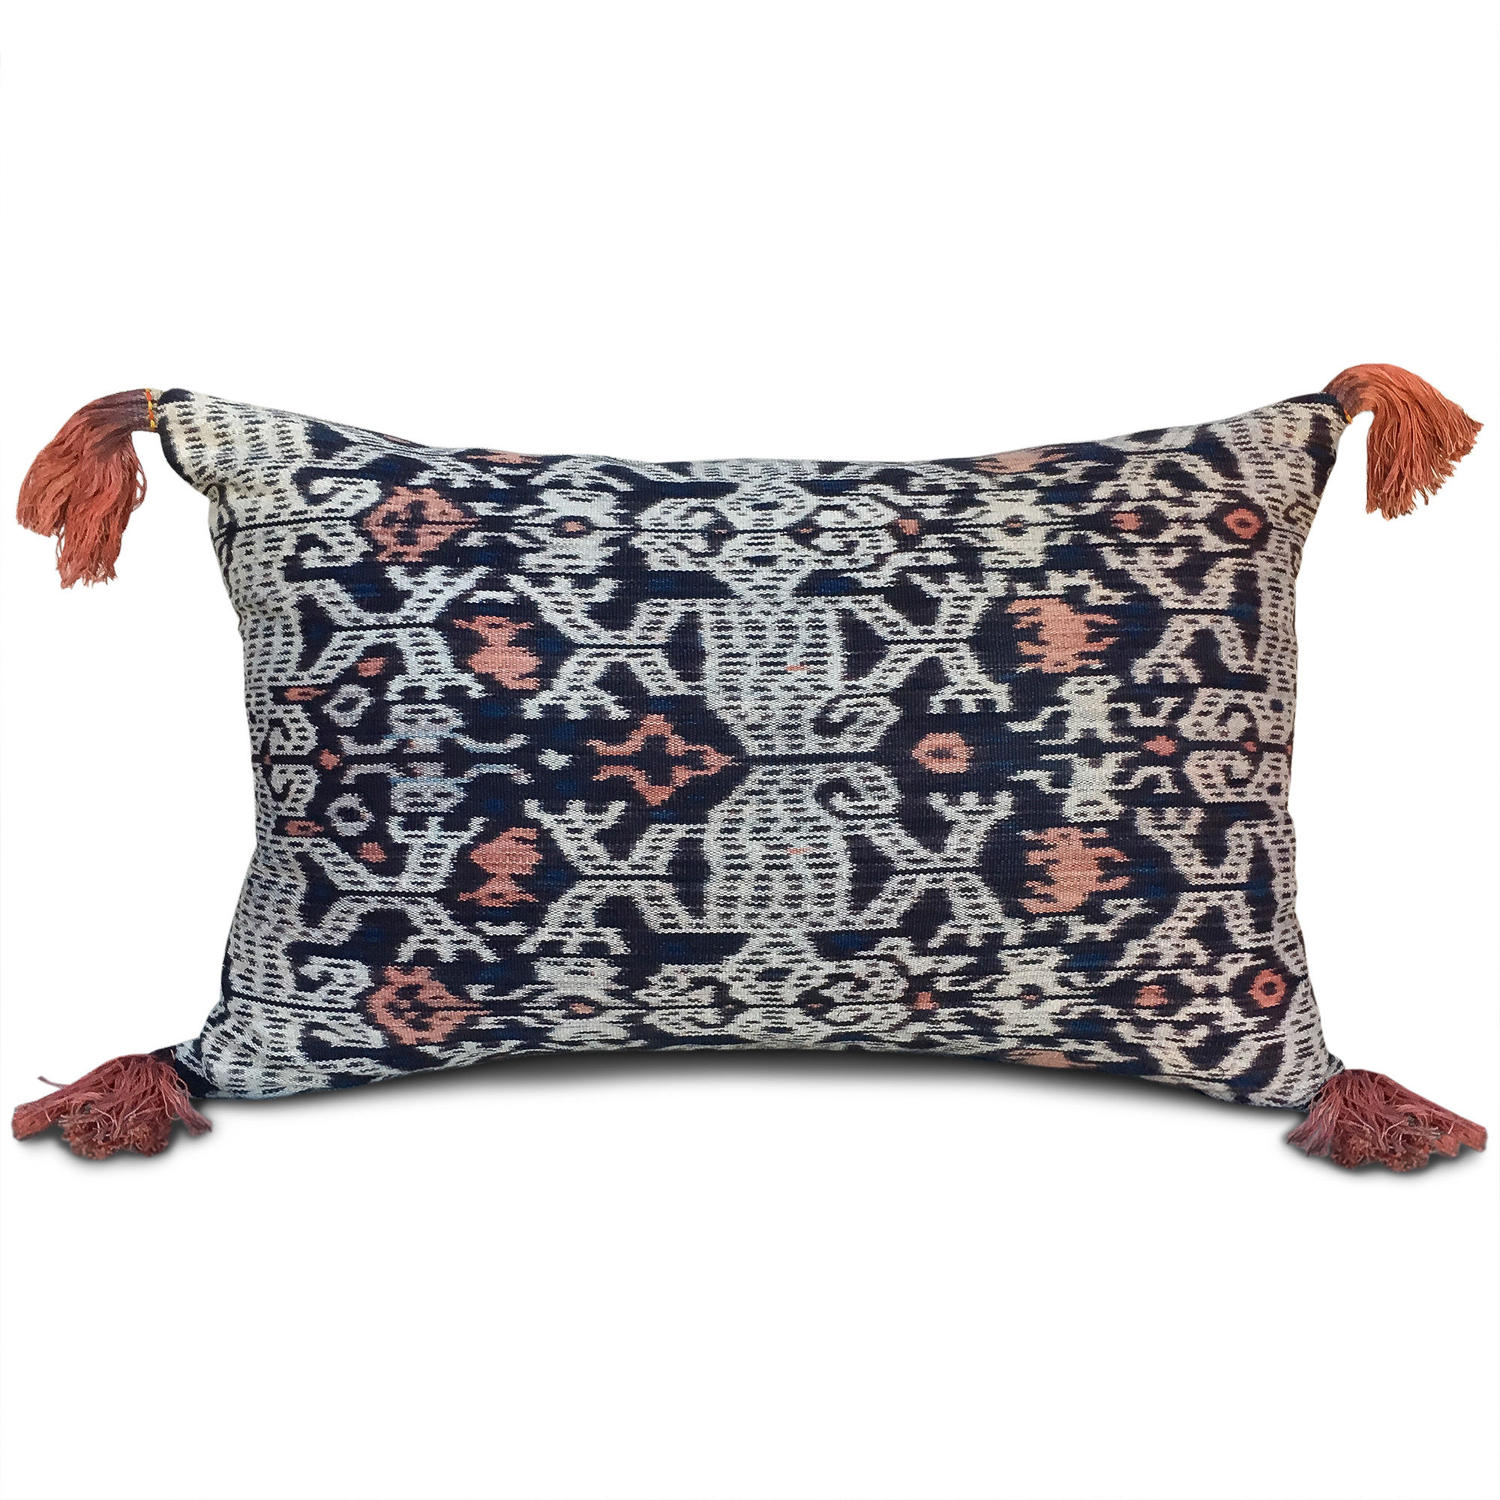 Timor Ikat Cushions with Tassels